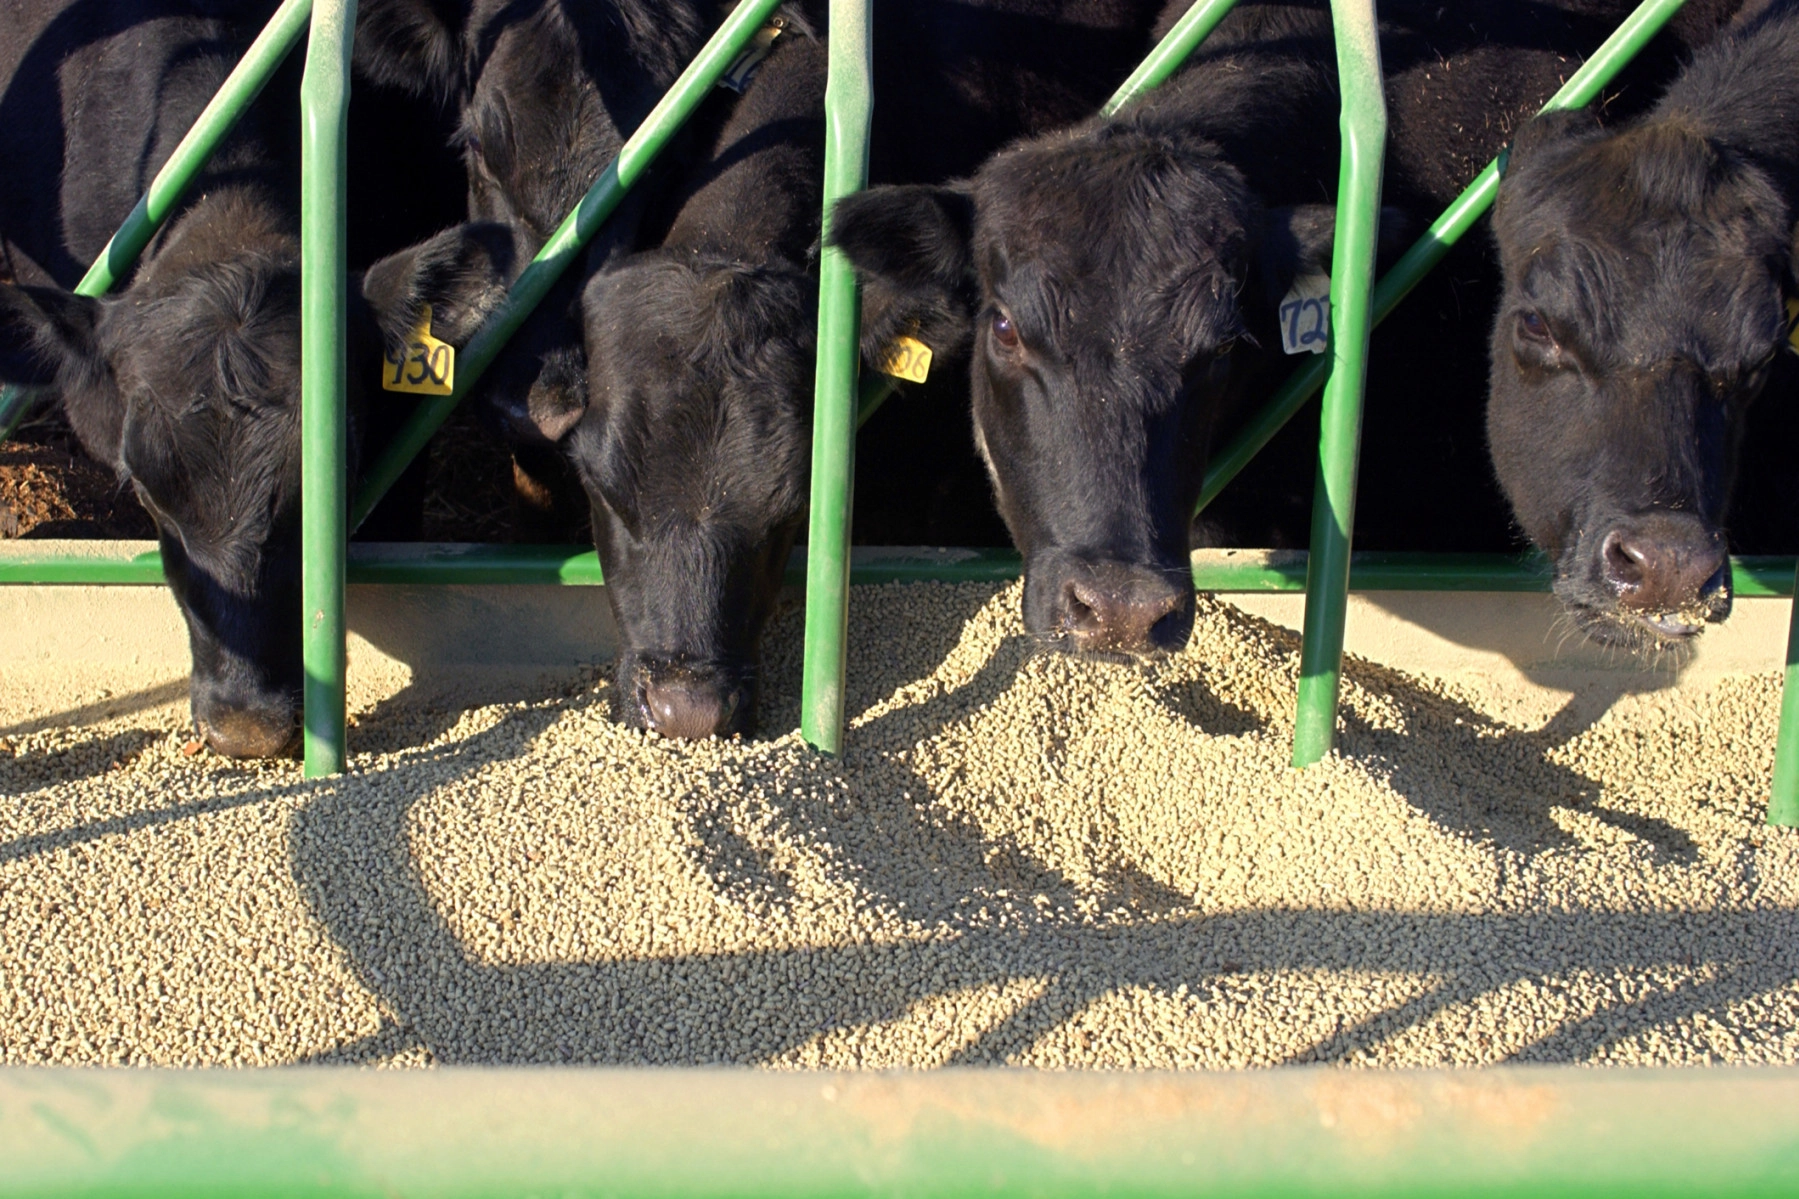 Four cows eating grain on a farm